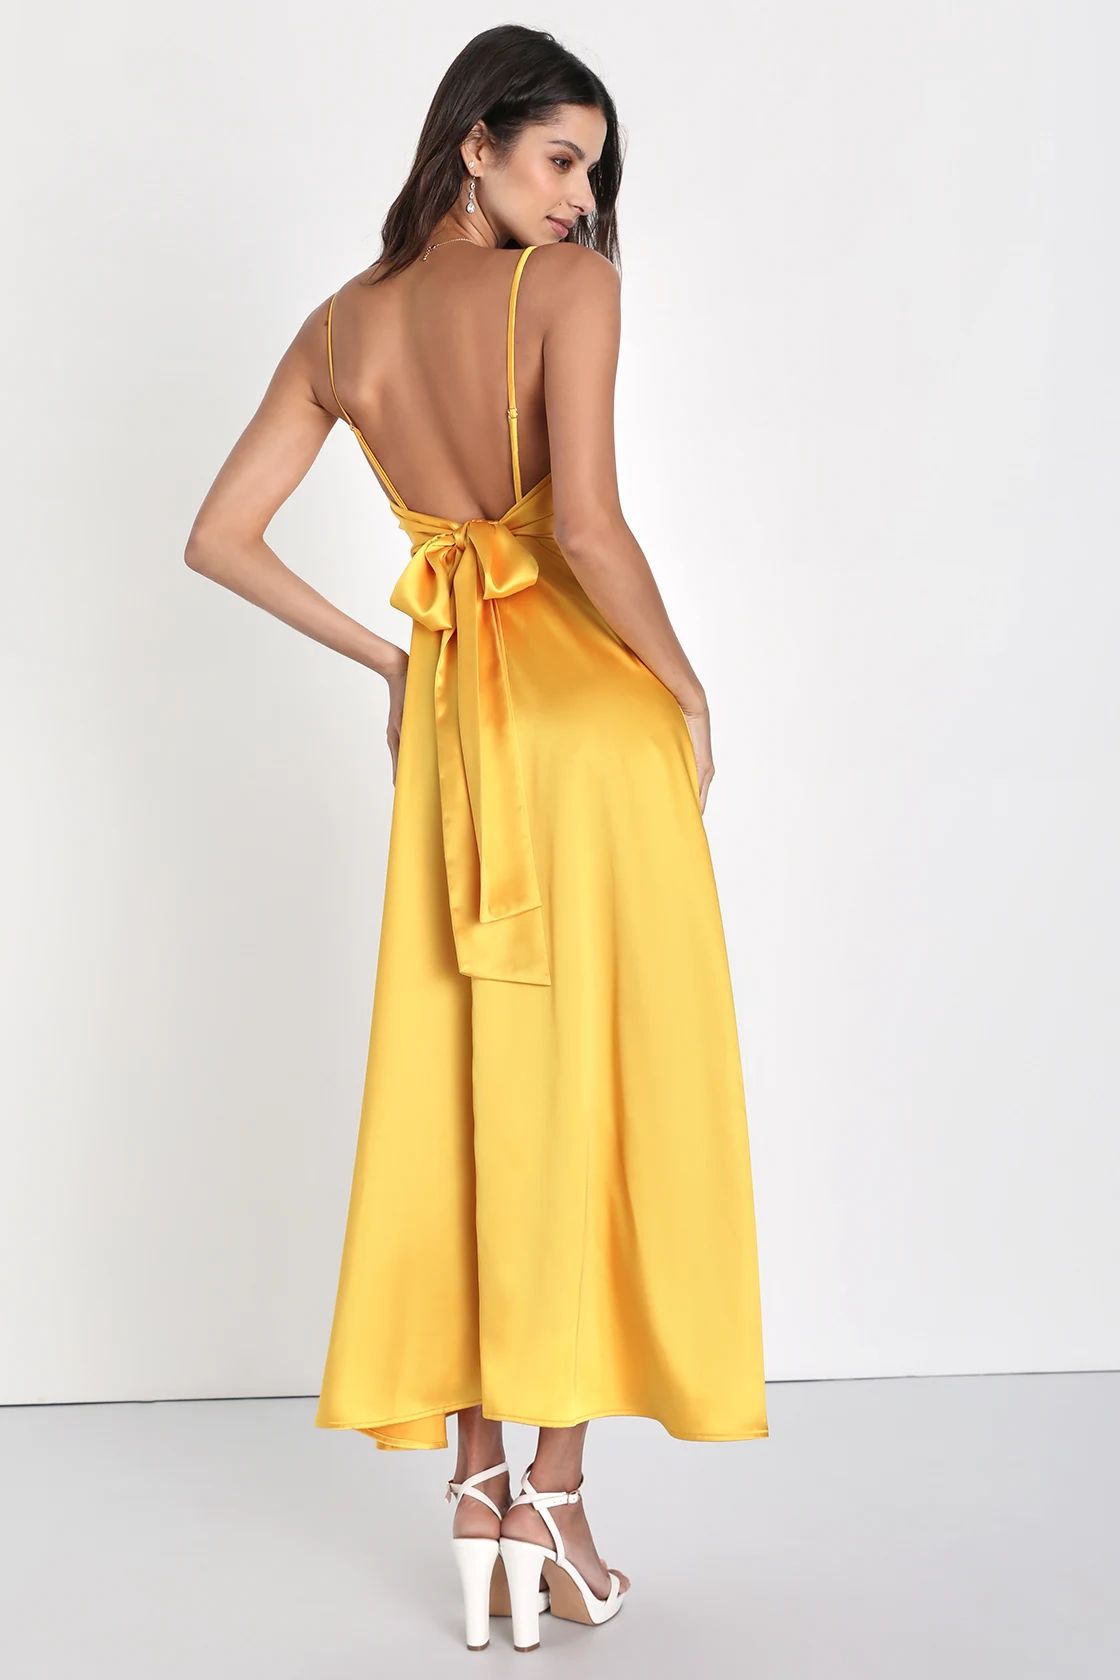 Always Audacious Marigold Yellow Satin Tie-Back Midi Dress | Lulus (US)